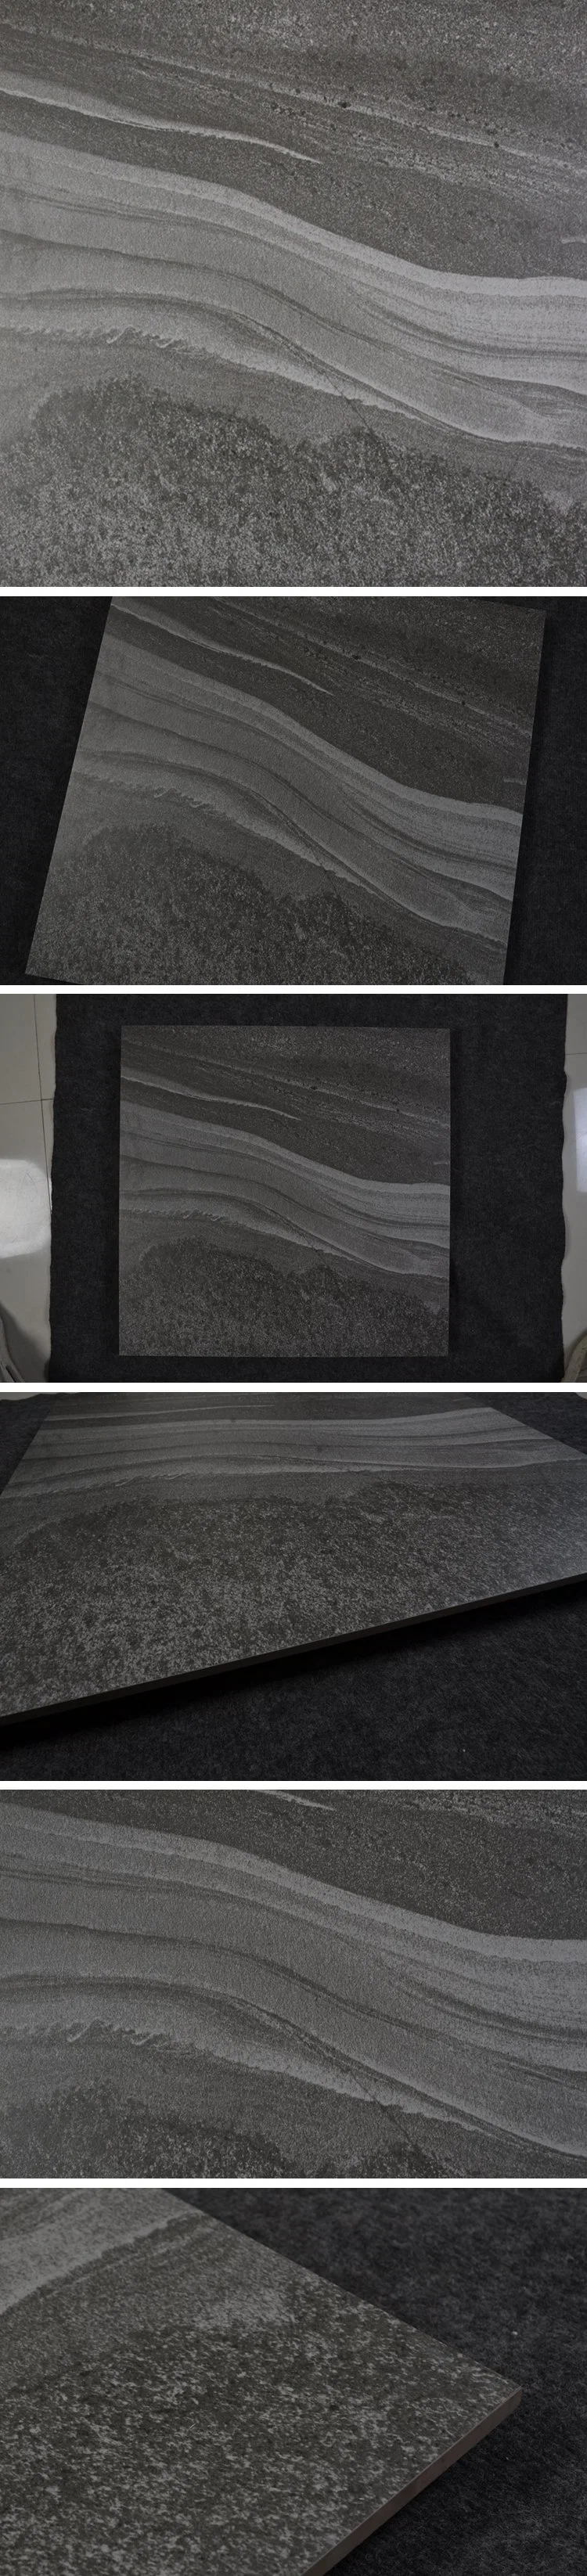 Kajaria Antacid Non-Slip Kitchen Floor Grey Sandstone Flooring Tile